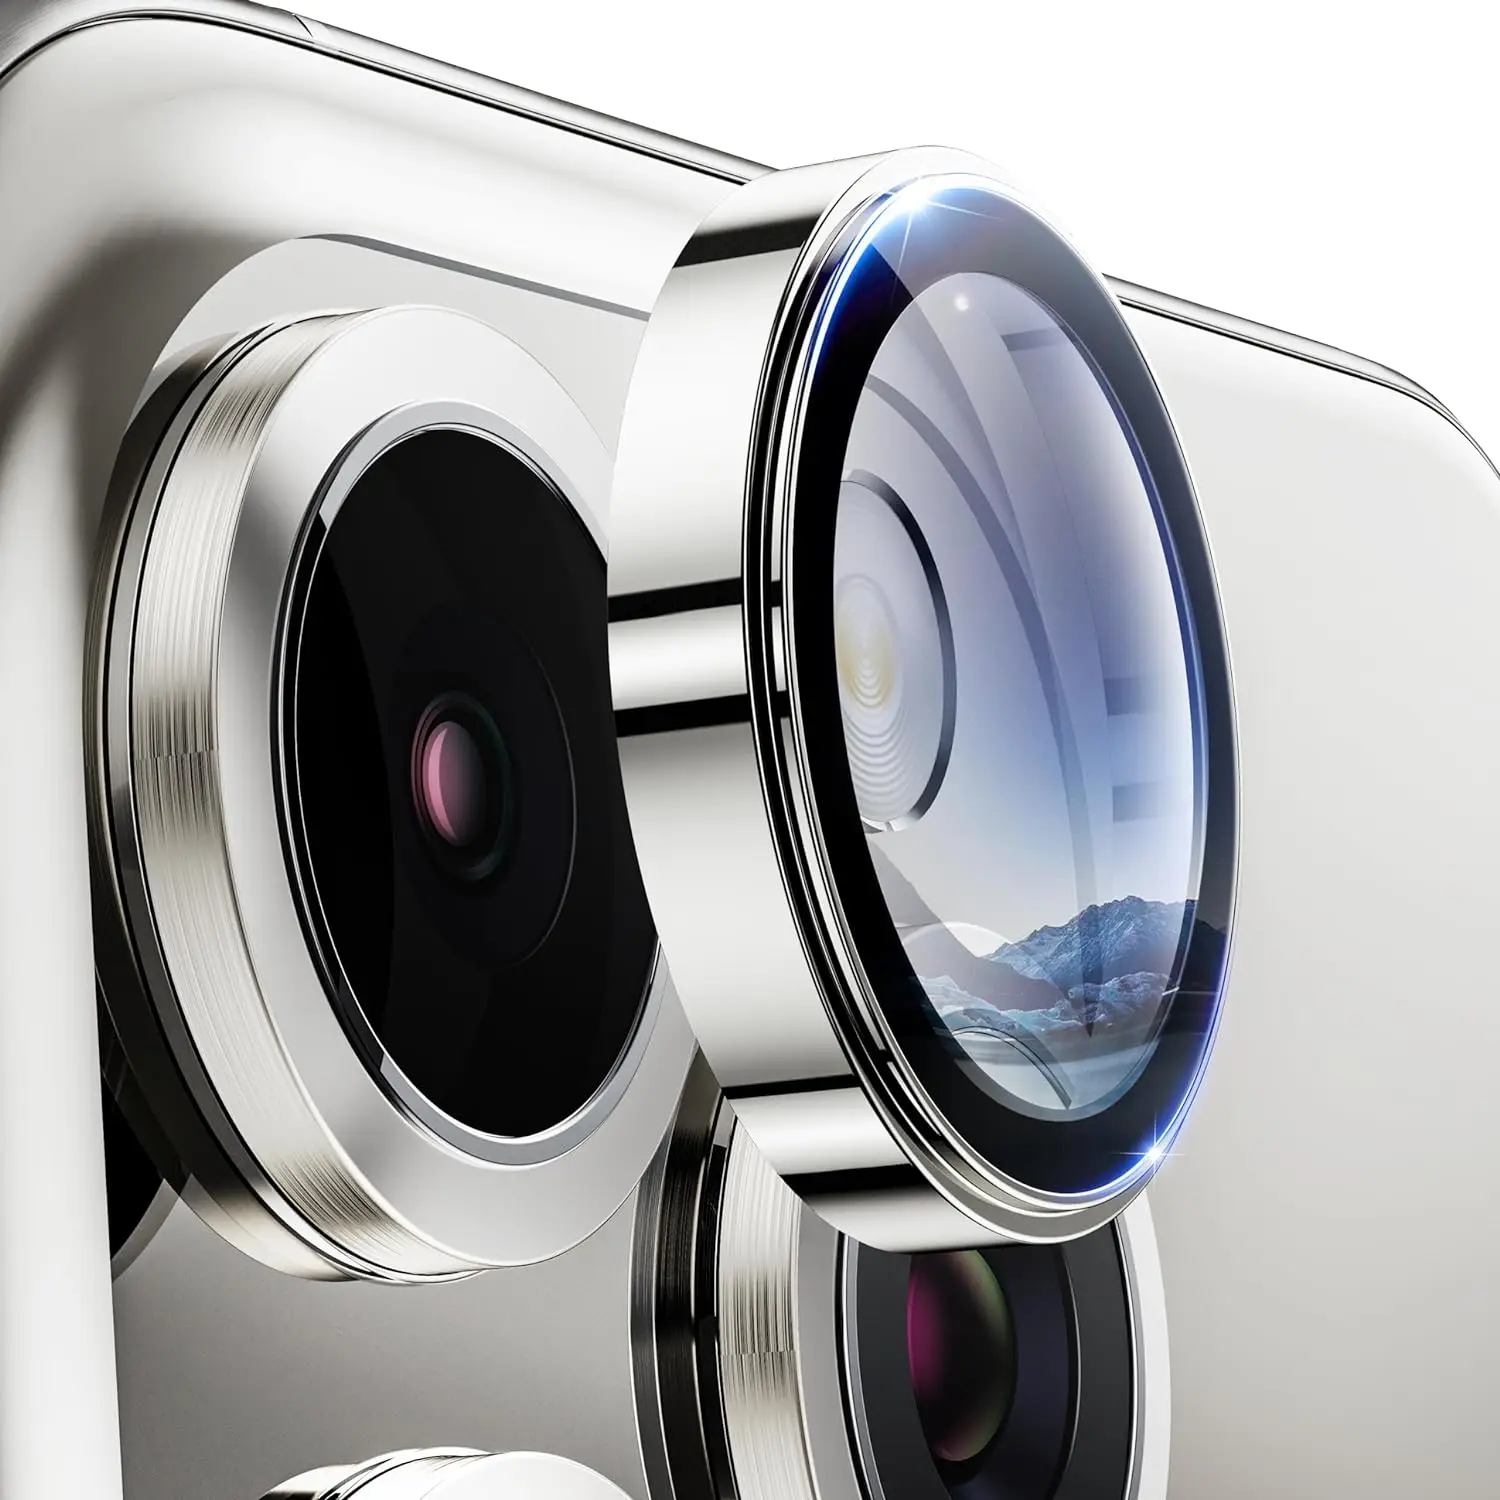 Tiger Glass Plus Camera Lens iPhone 15 Pro / 15 Pro Max